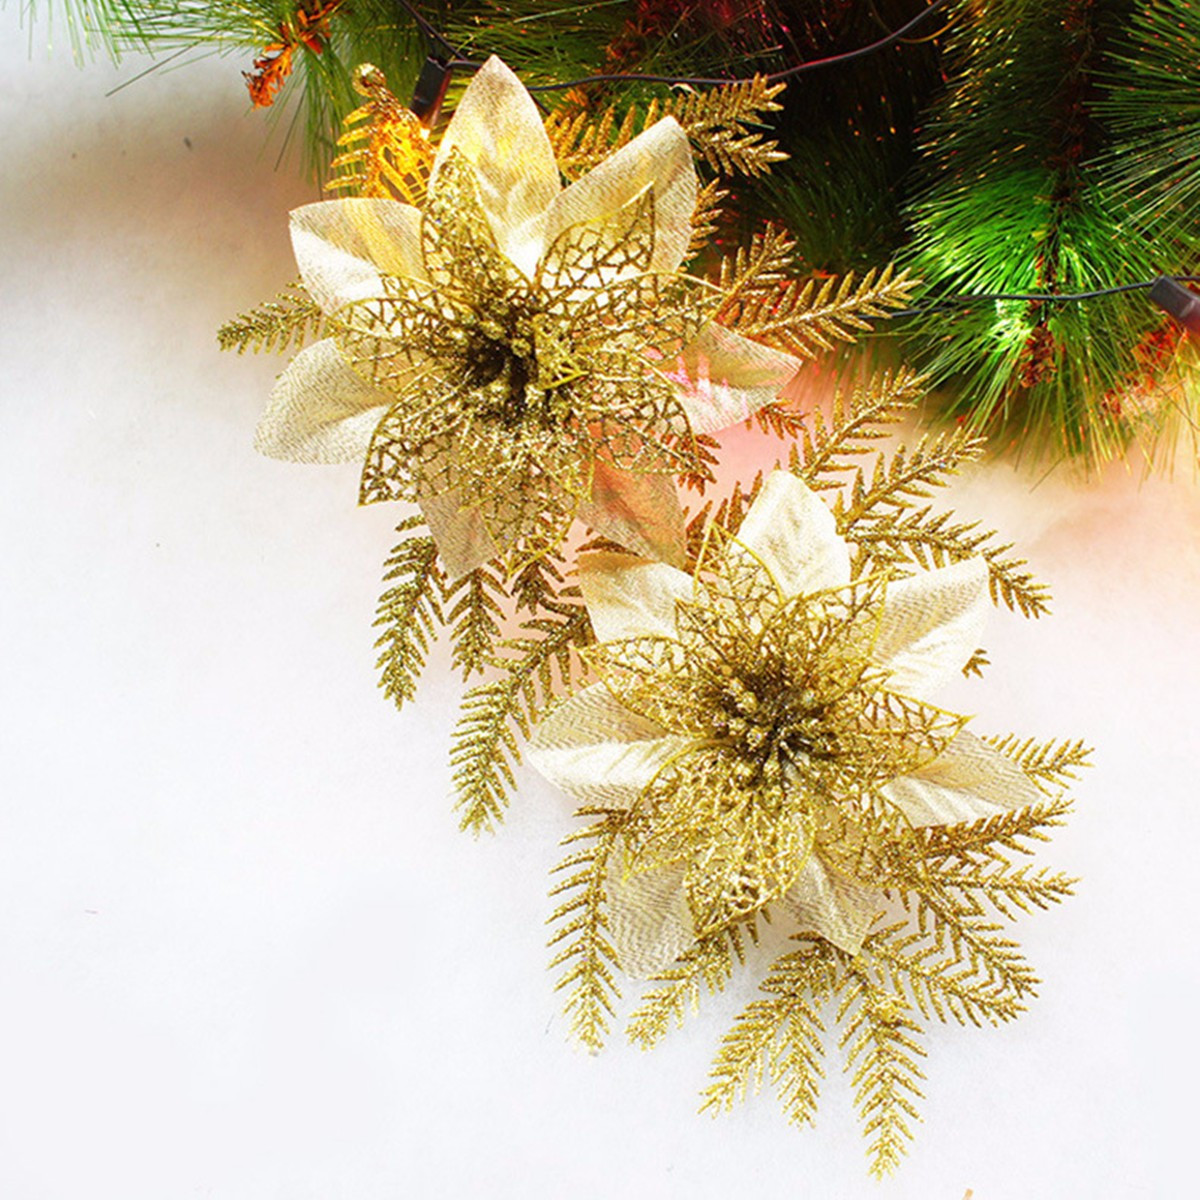 Christmas Tree Flower Ornaments
 Glitter Artificial Christmas Tree Flowers Ornament Pendant